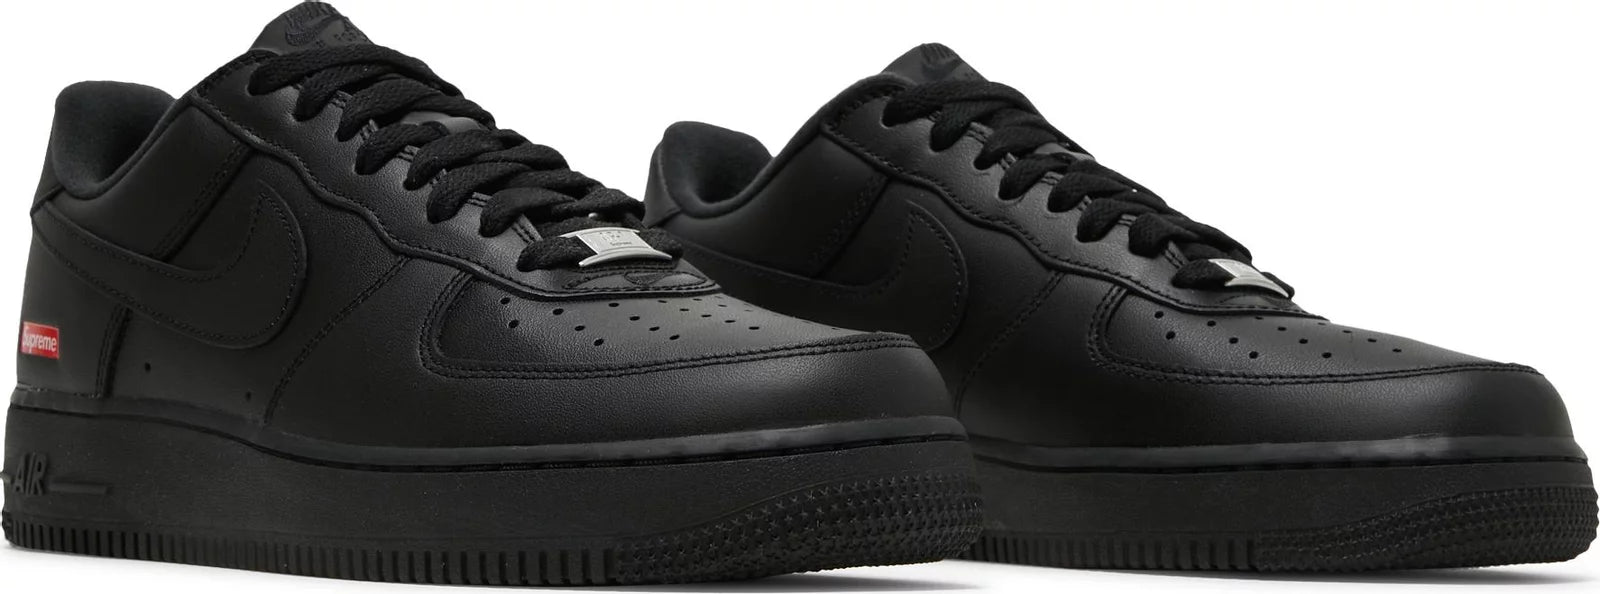 Air Force 1 Low Supreme Black - Paroissesaintefoy Sneakers Sale Online